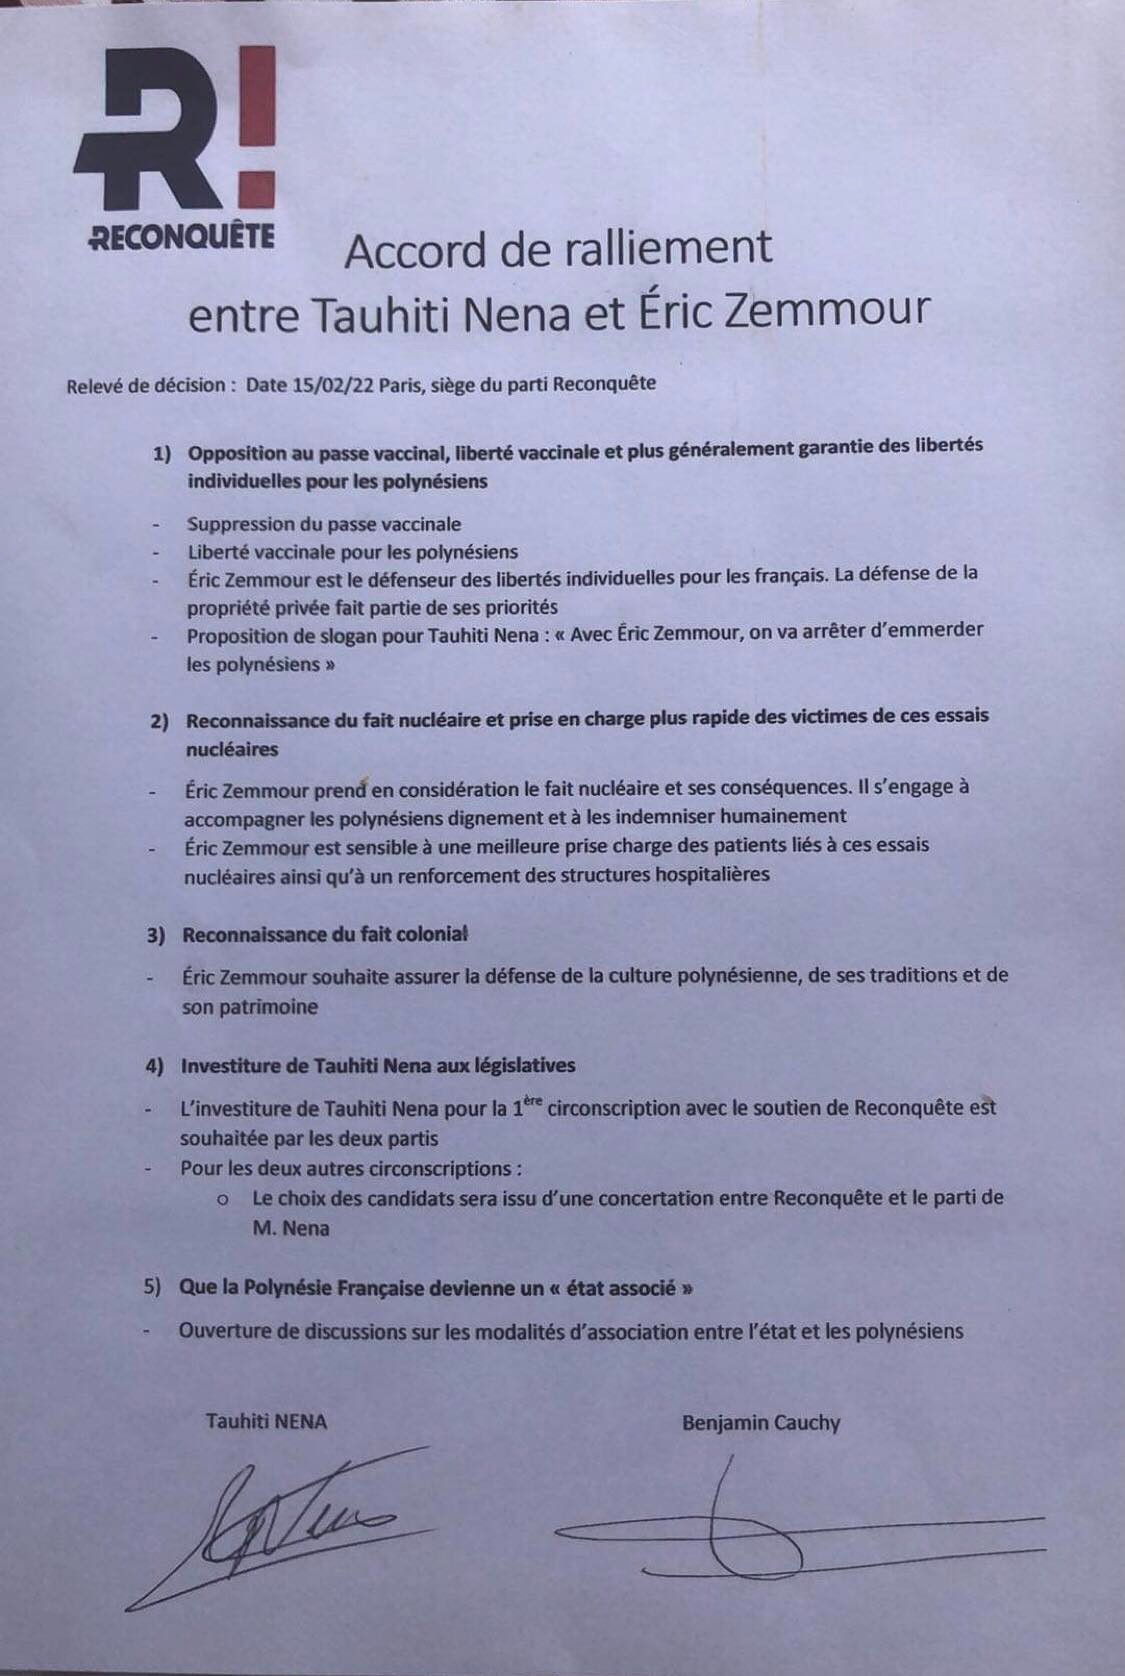 Tauhiti Nena signe un accord avec Éric Zemmour